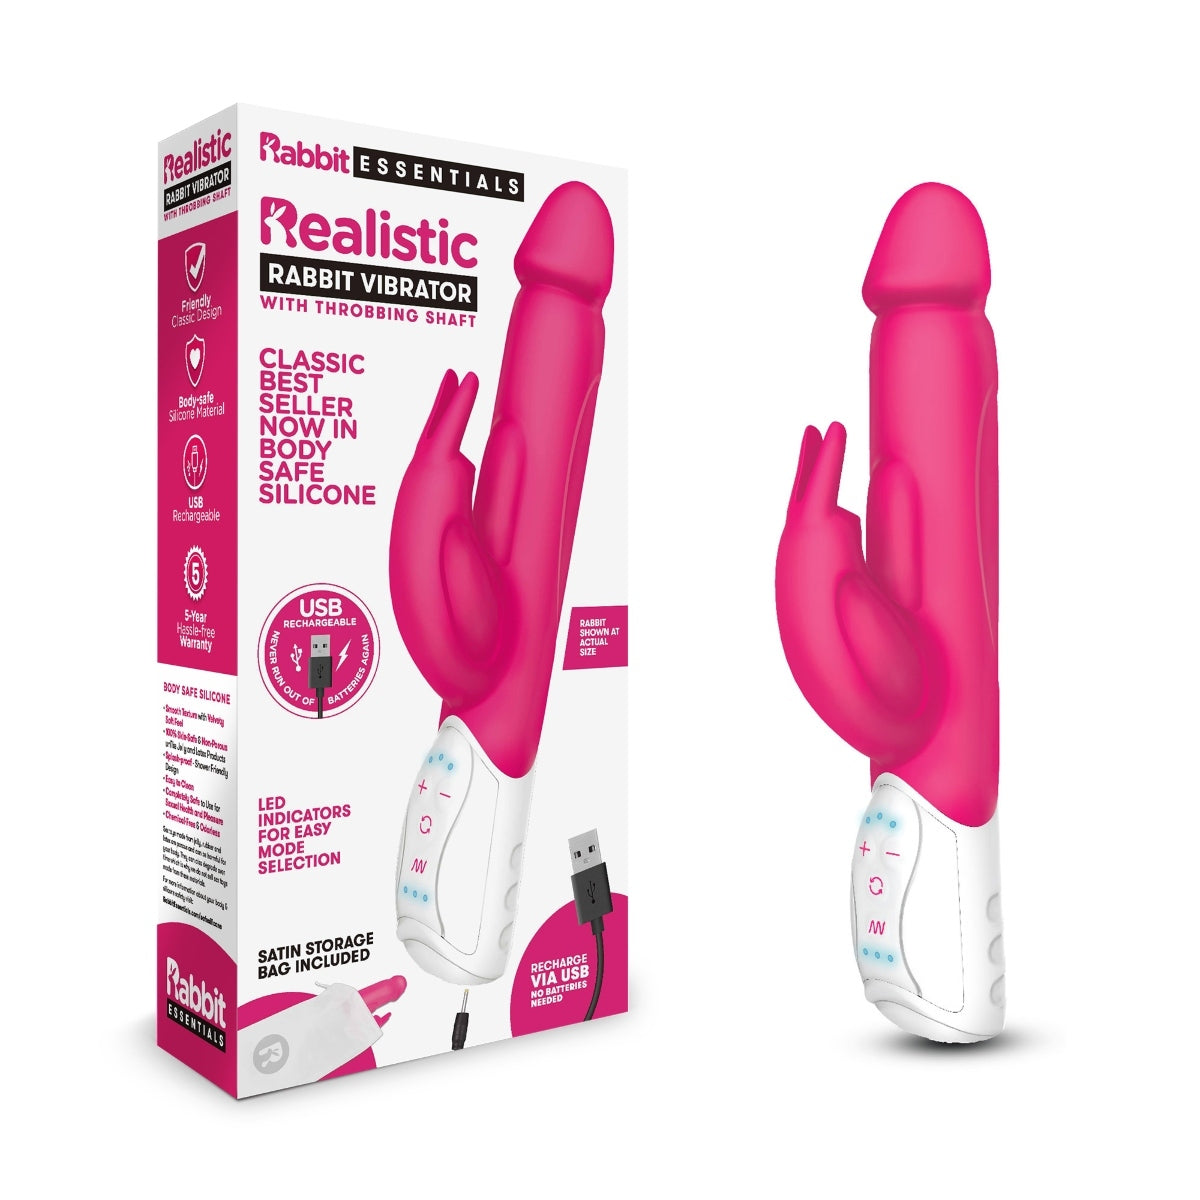 Rabbit Essentials Realistic Rabbit Vibrator With Throbbing Shaft Hot Pink